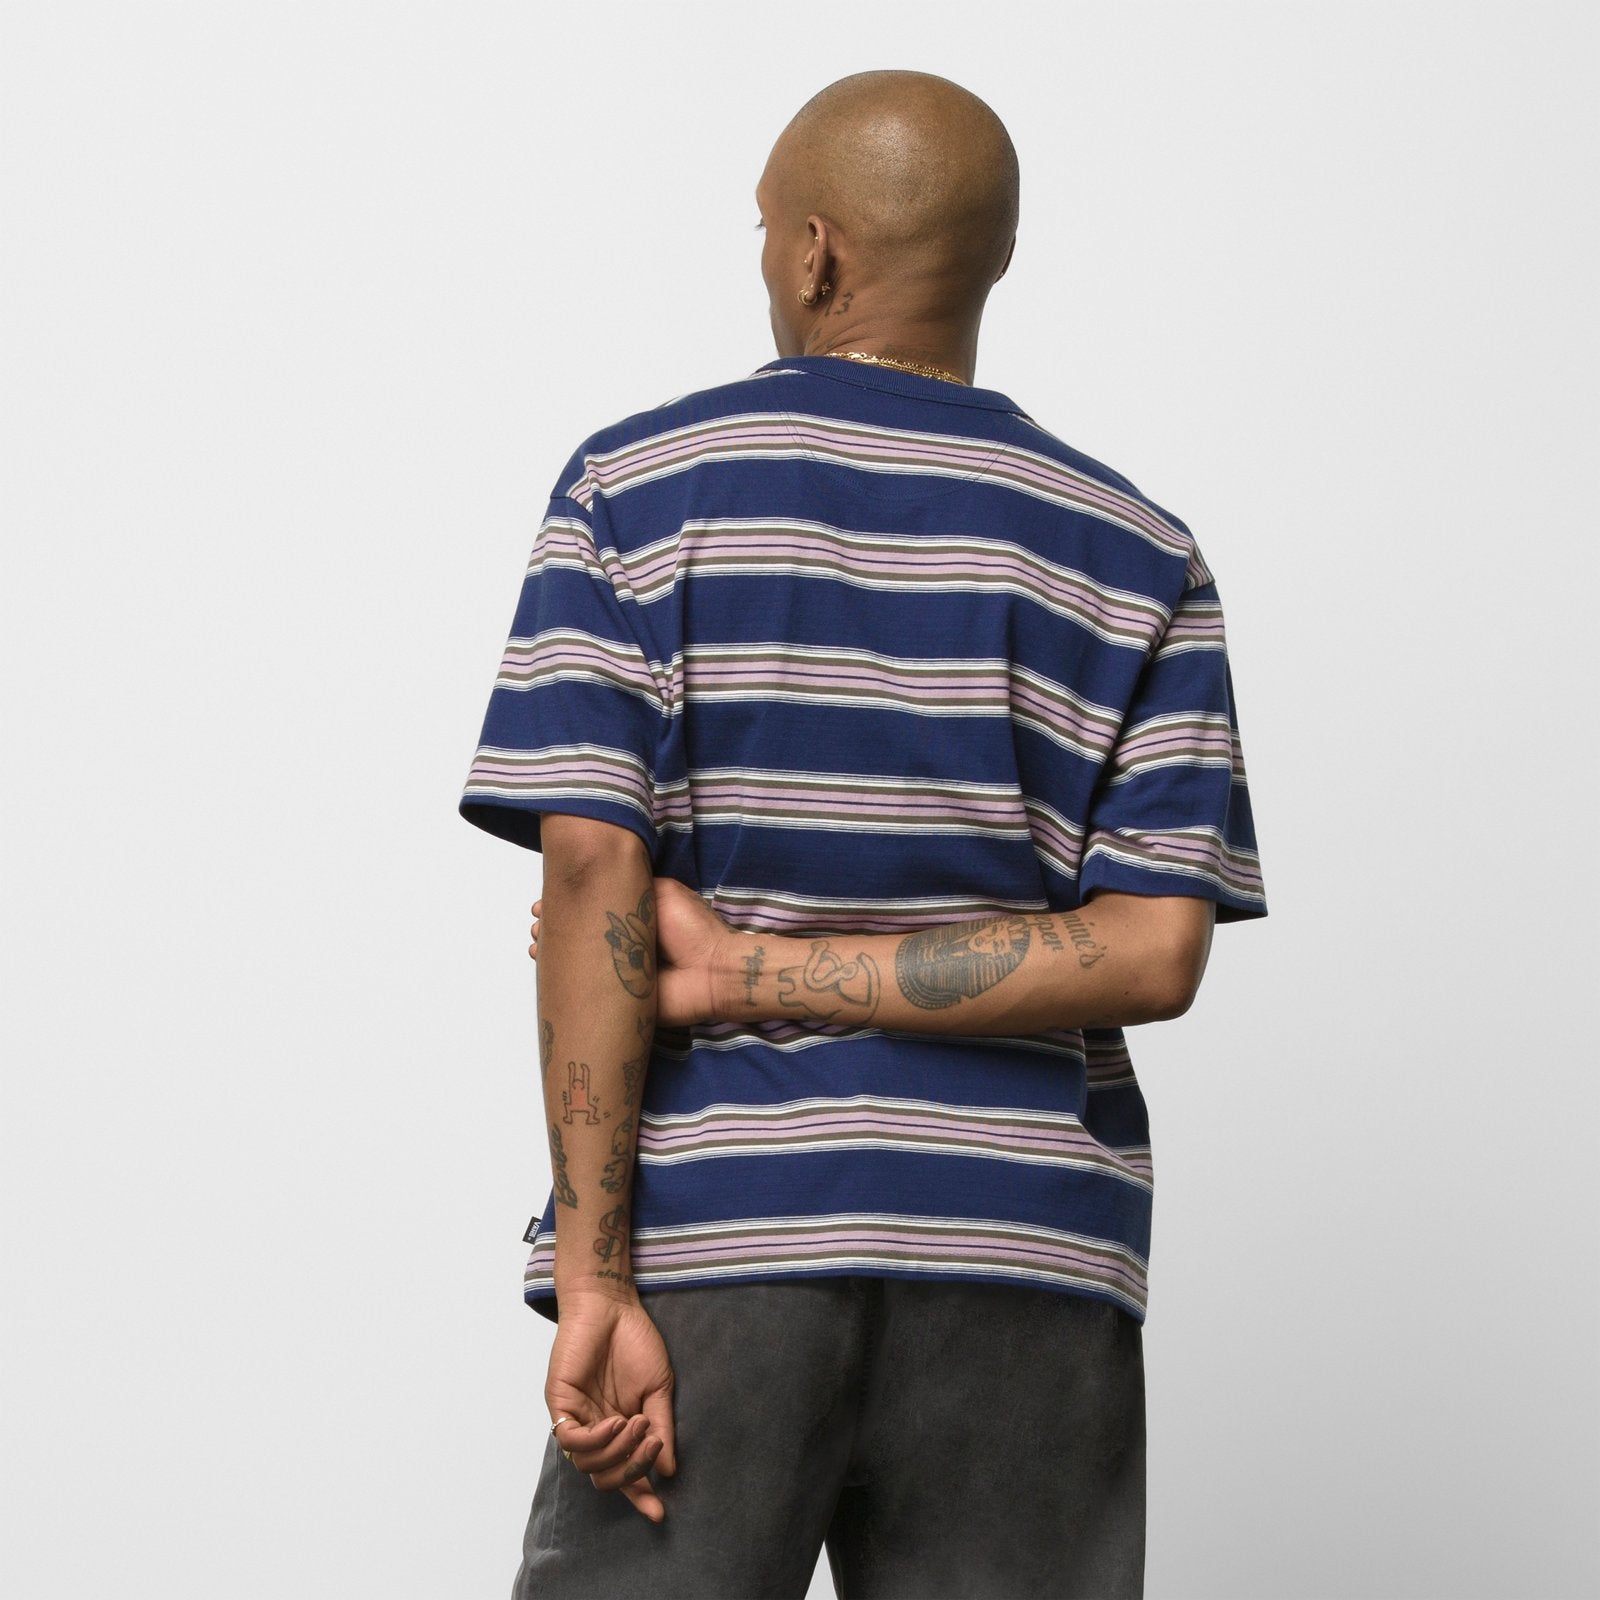 Dress Blues Wilson Knit Vans Striped T-Shirt Back